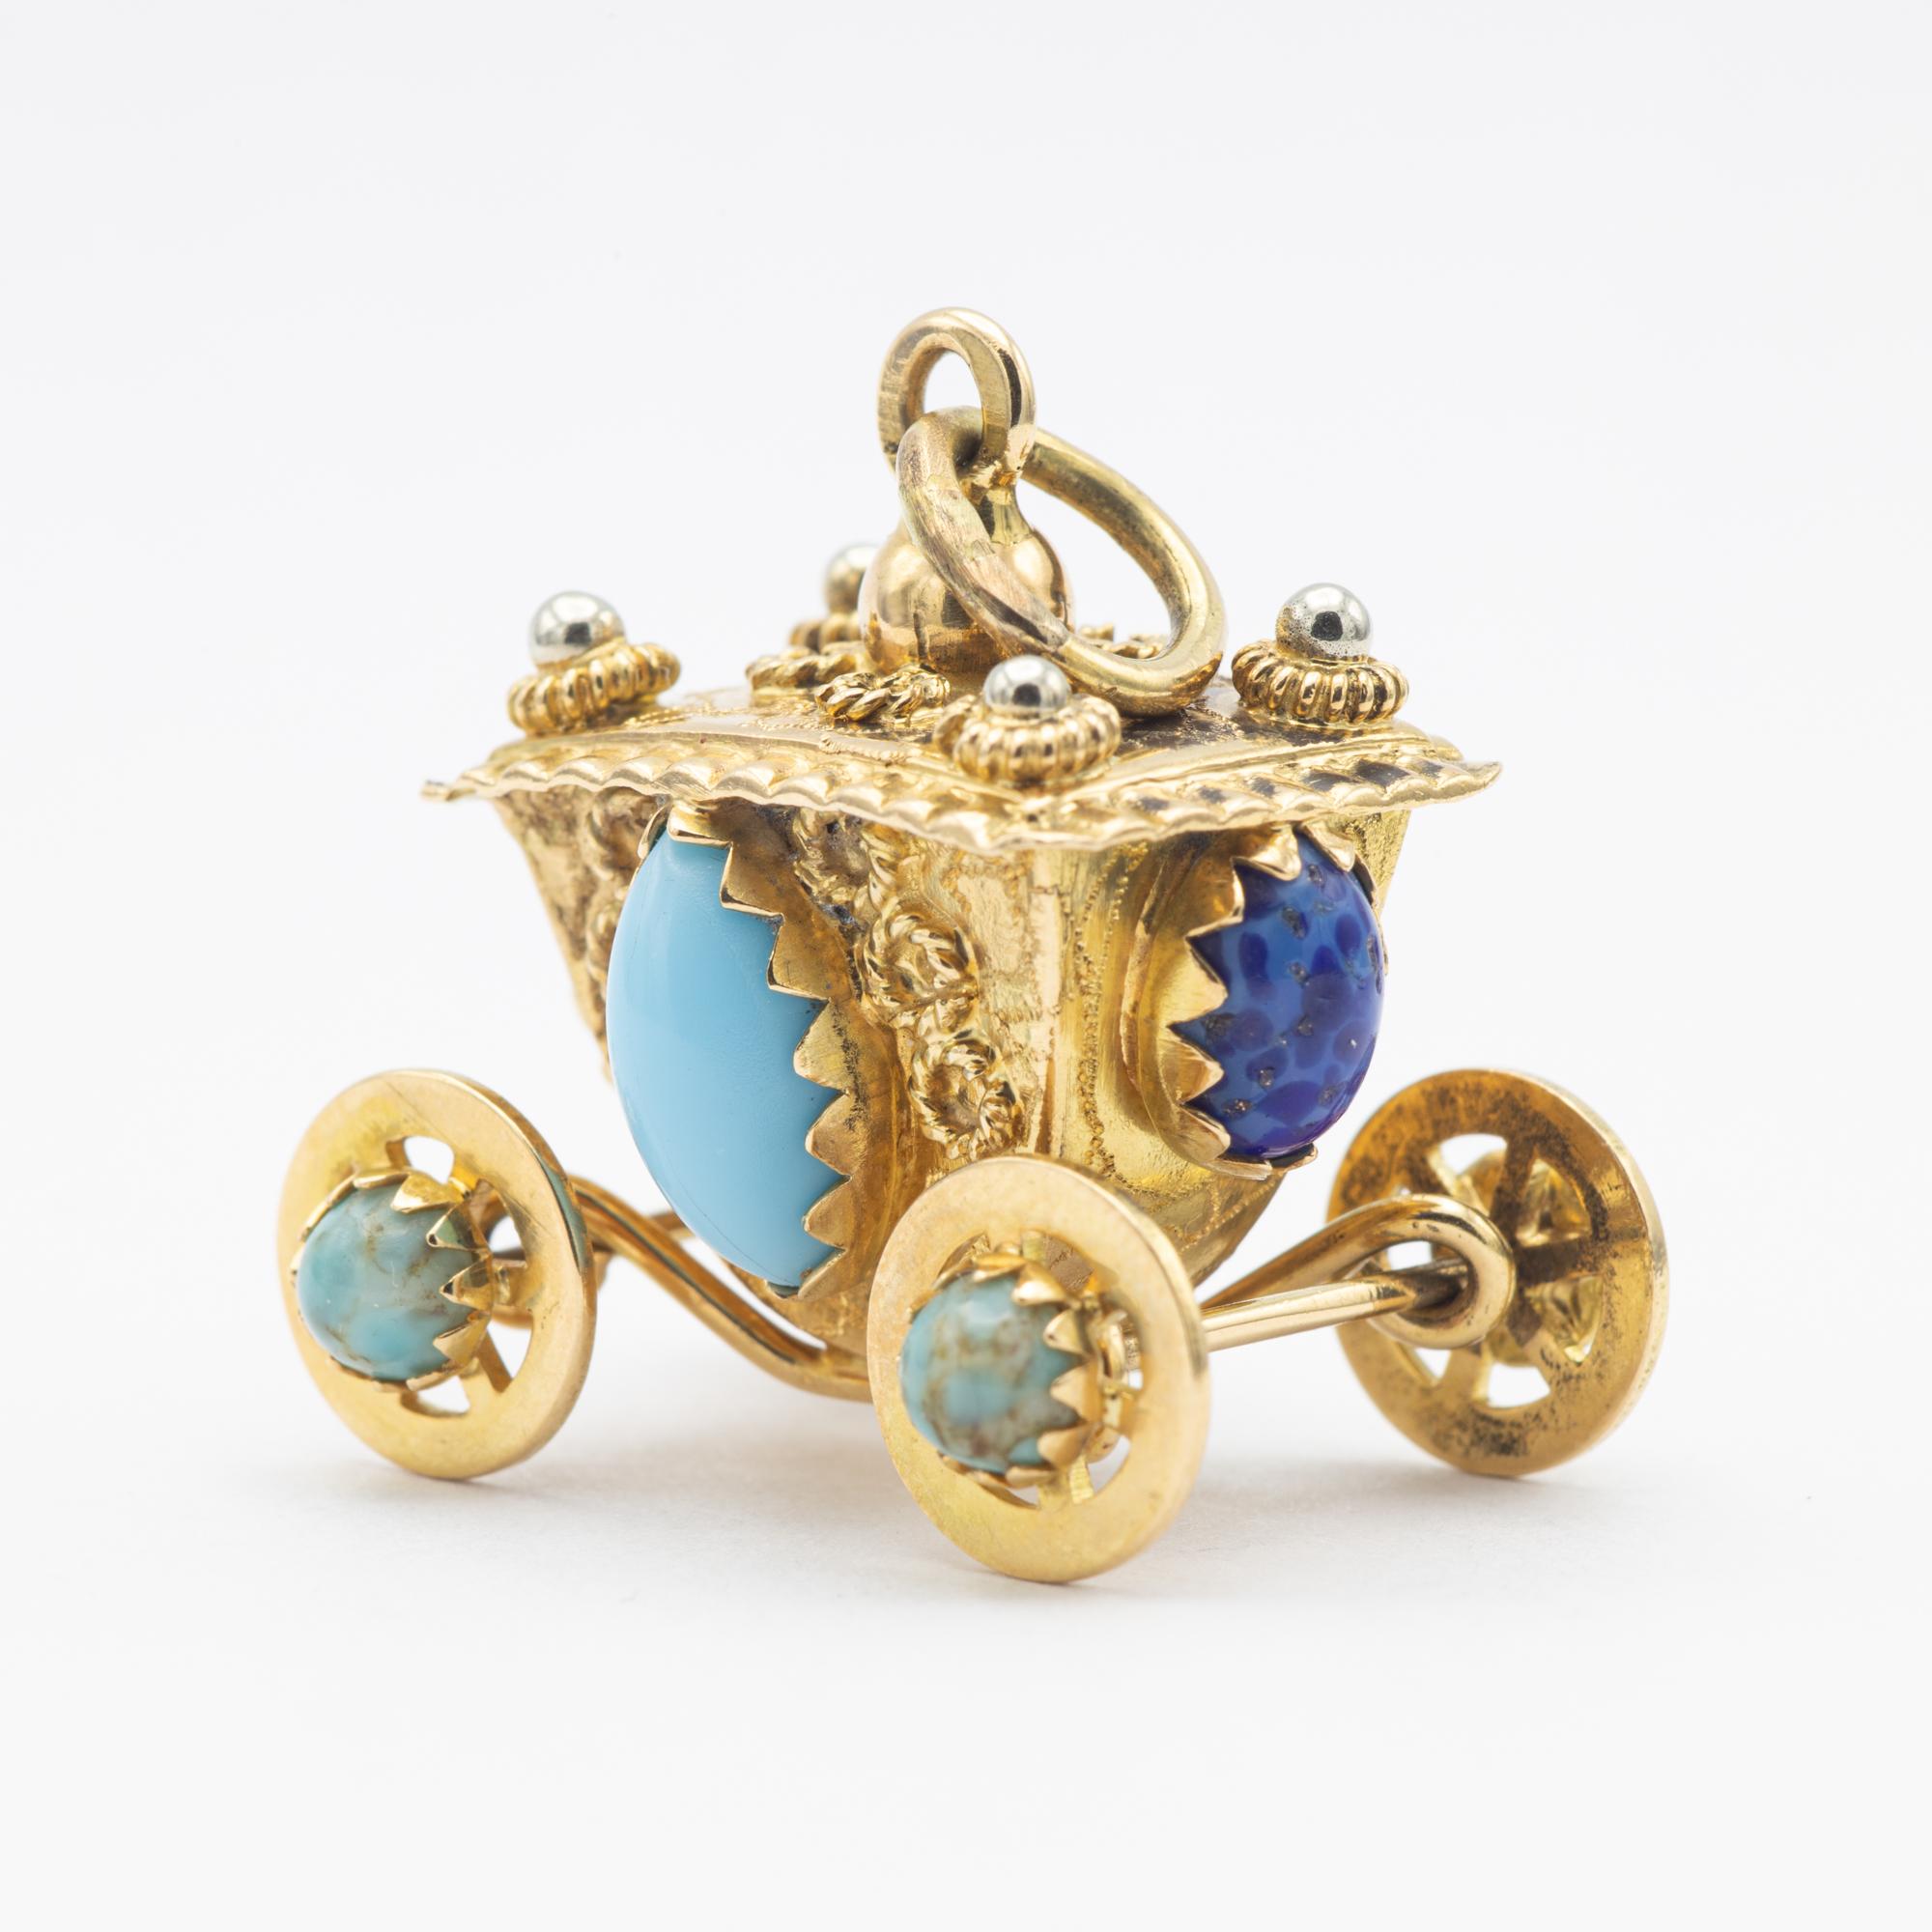 Women's or Men's 18k solid gold Italian carriage pendant - horse car - Venetian Etruscan - 1960's